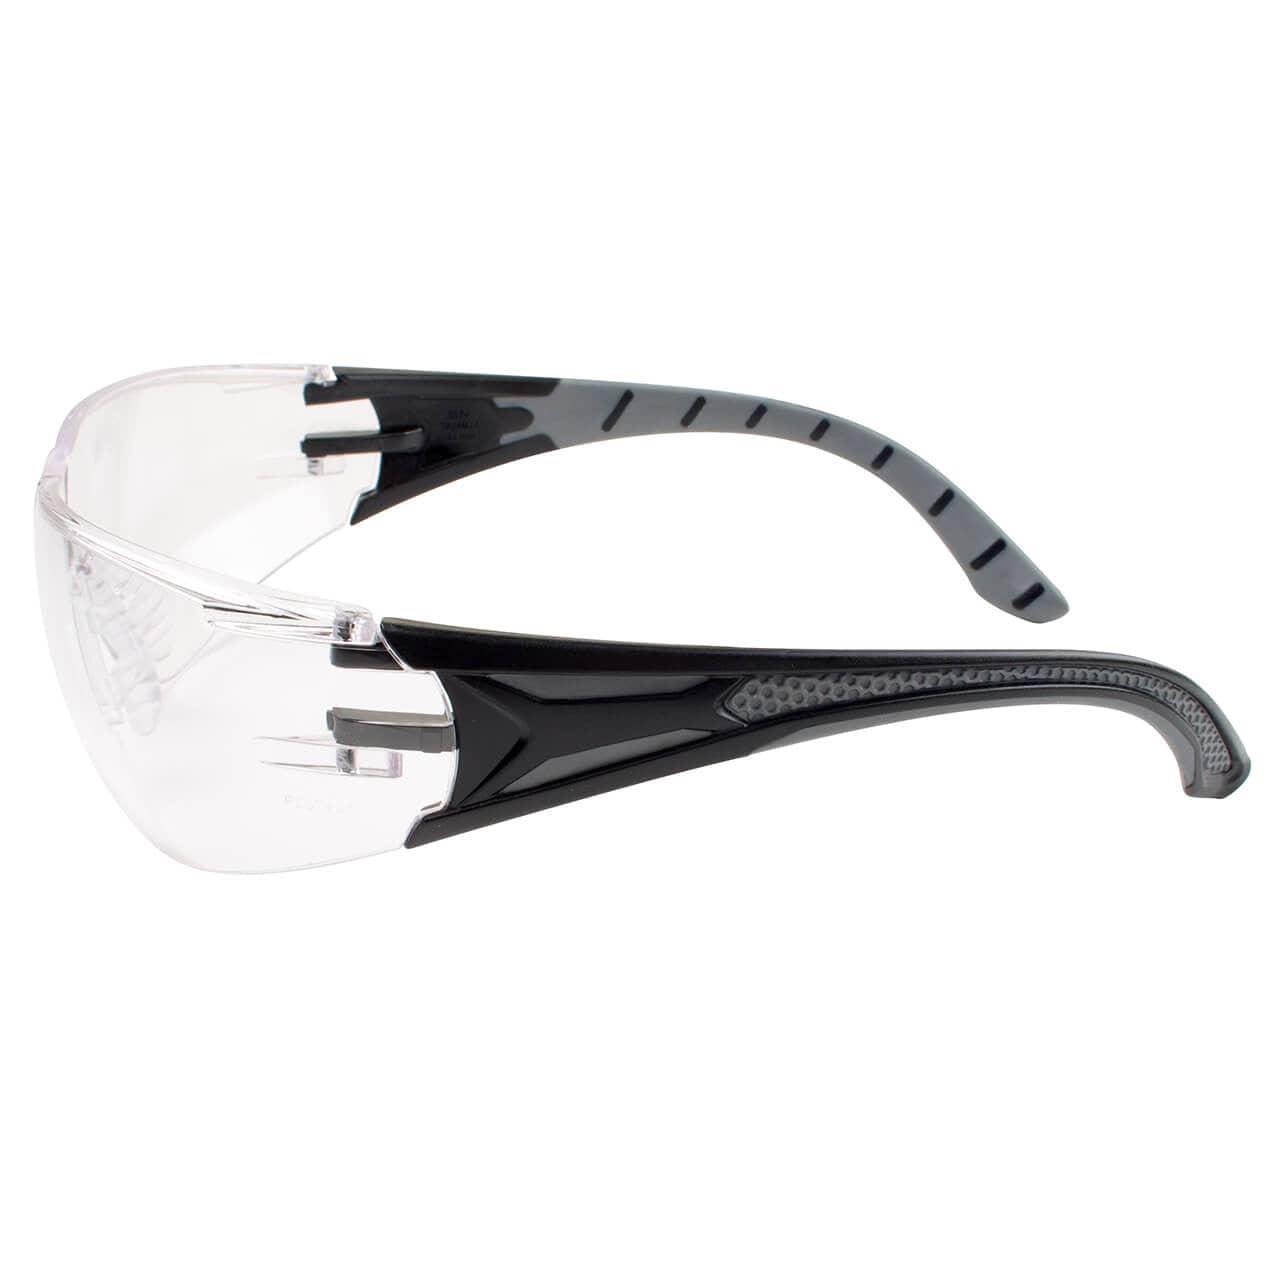 METEL M50 Safety Glasses - Safety Glasses USA